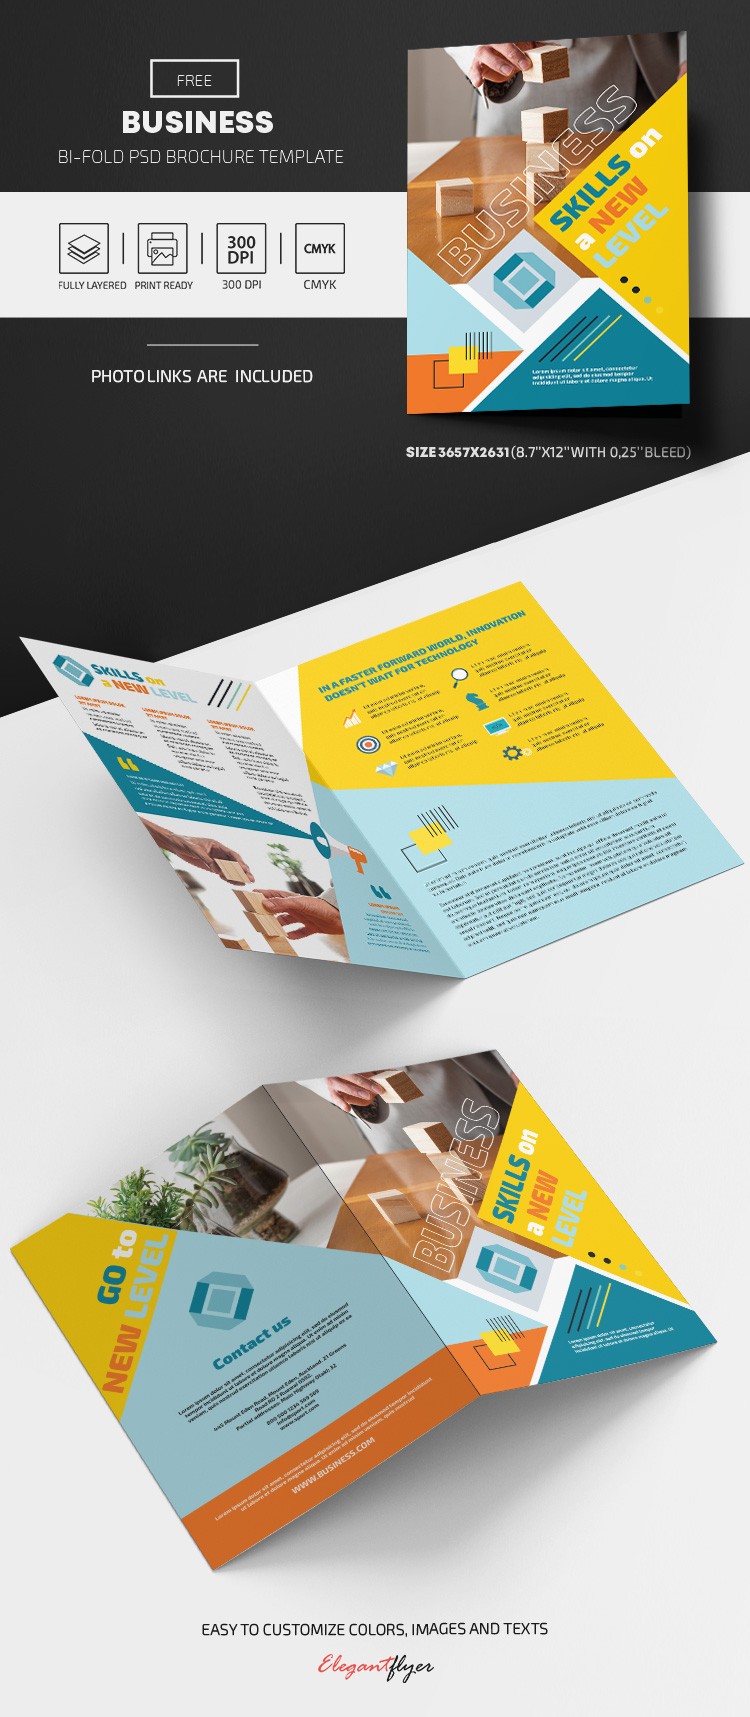 Brochura de Negócios Bi-Fold Gratuita by ElegantFlyer